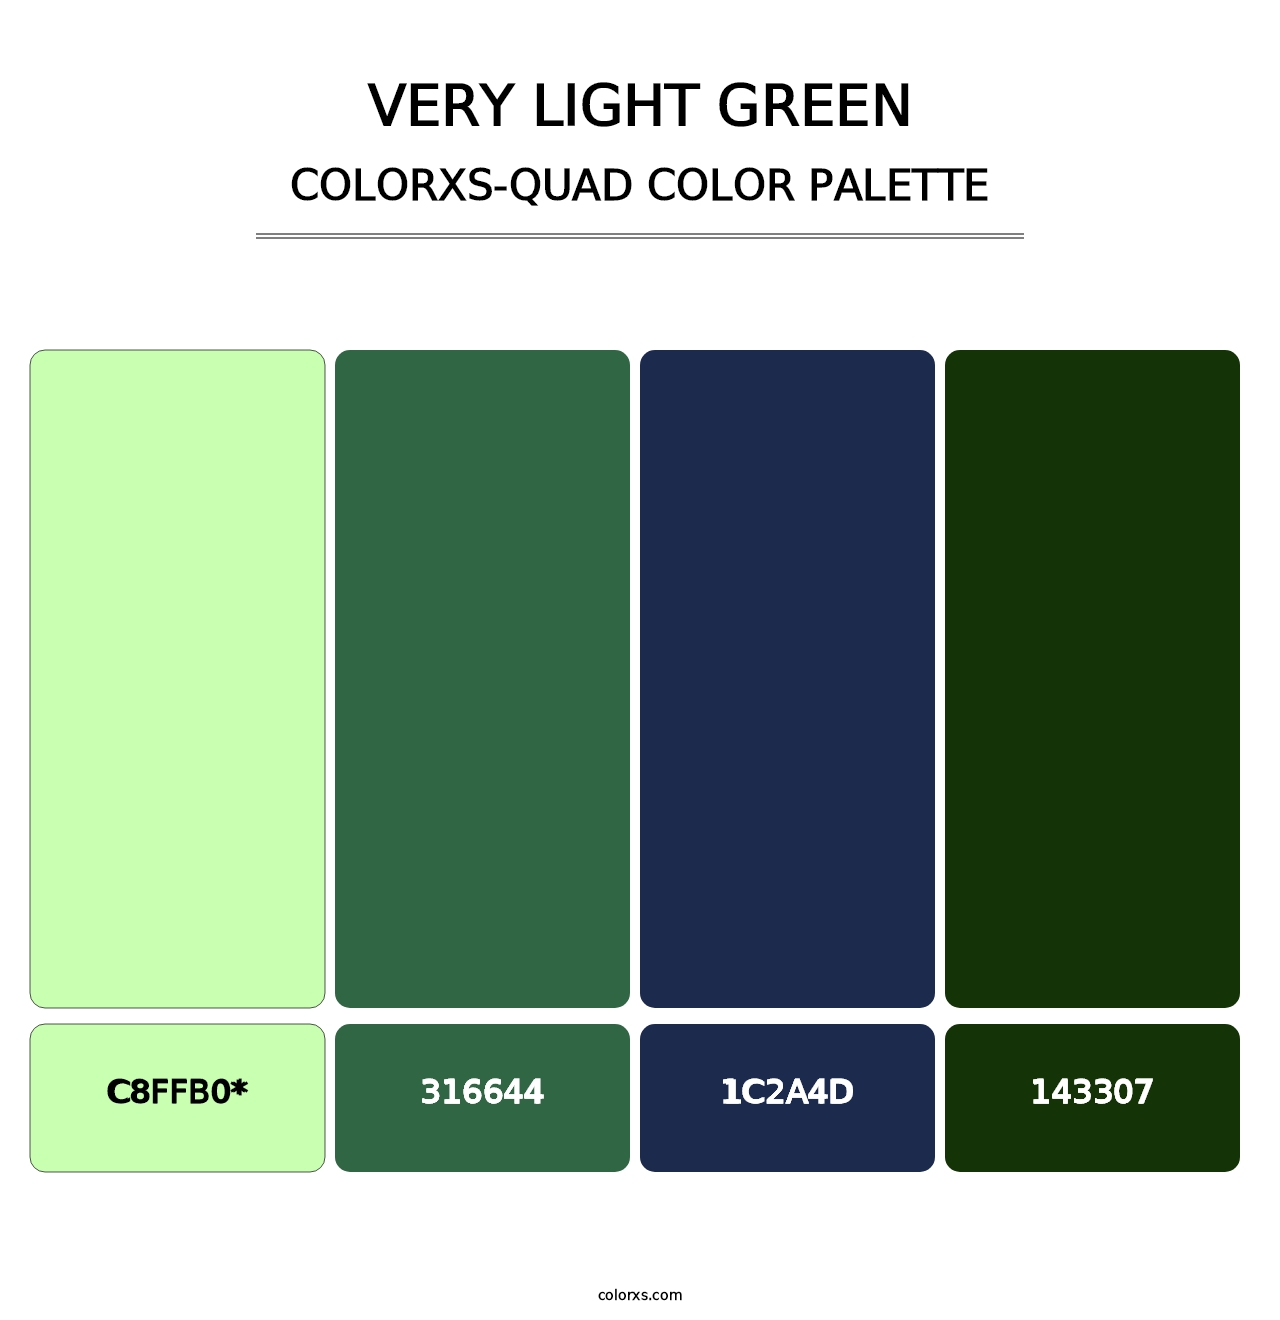 Very Light Green - Colorxs Quad Palette